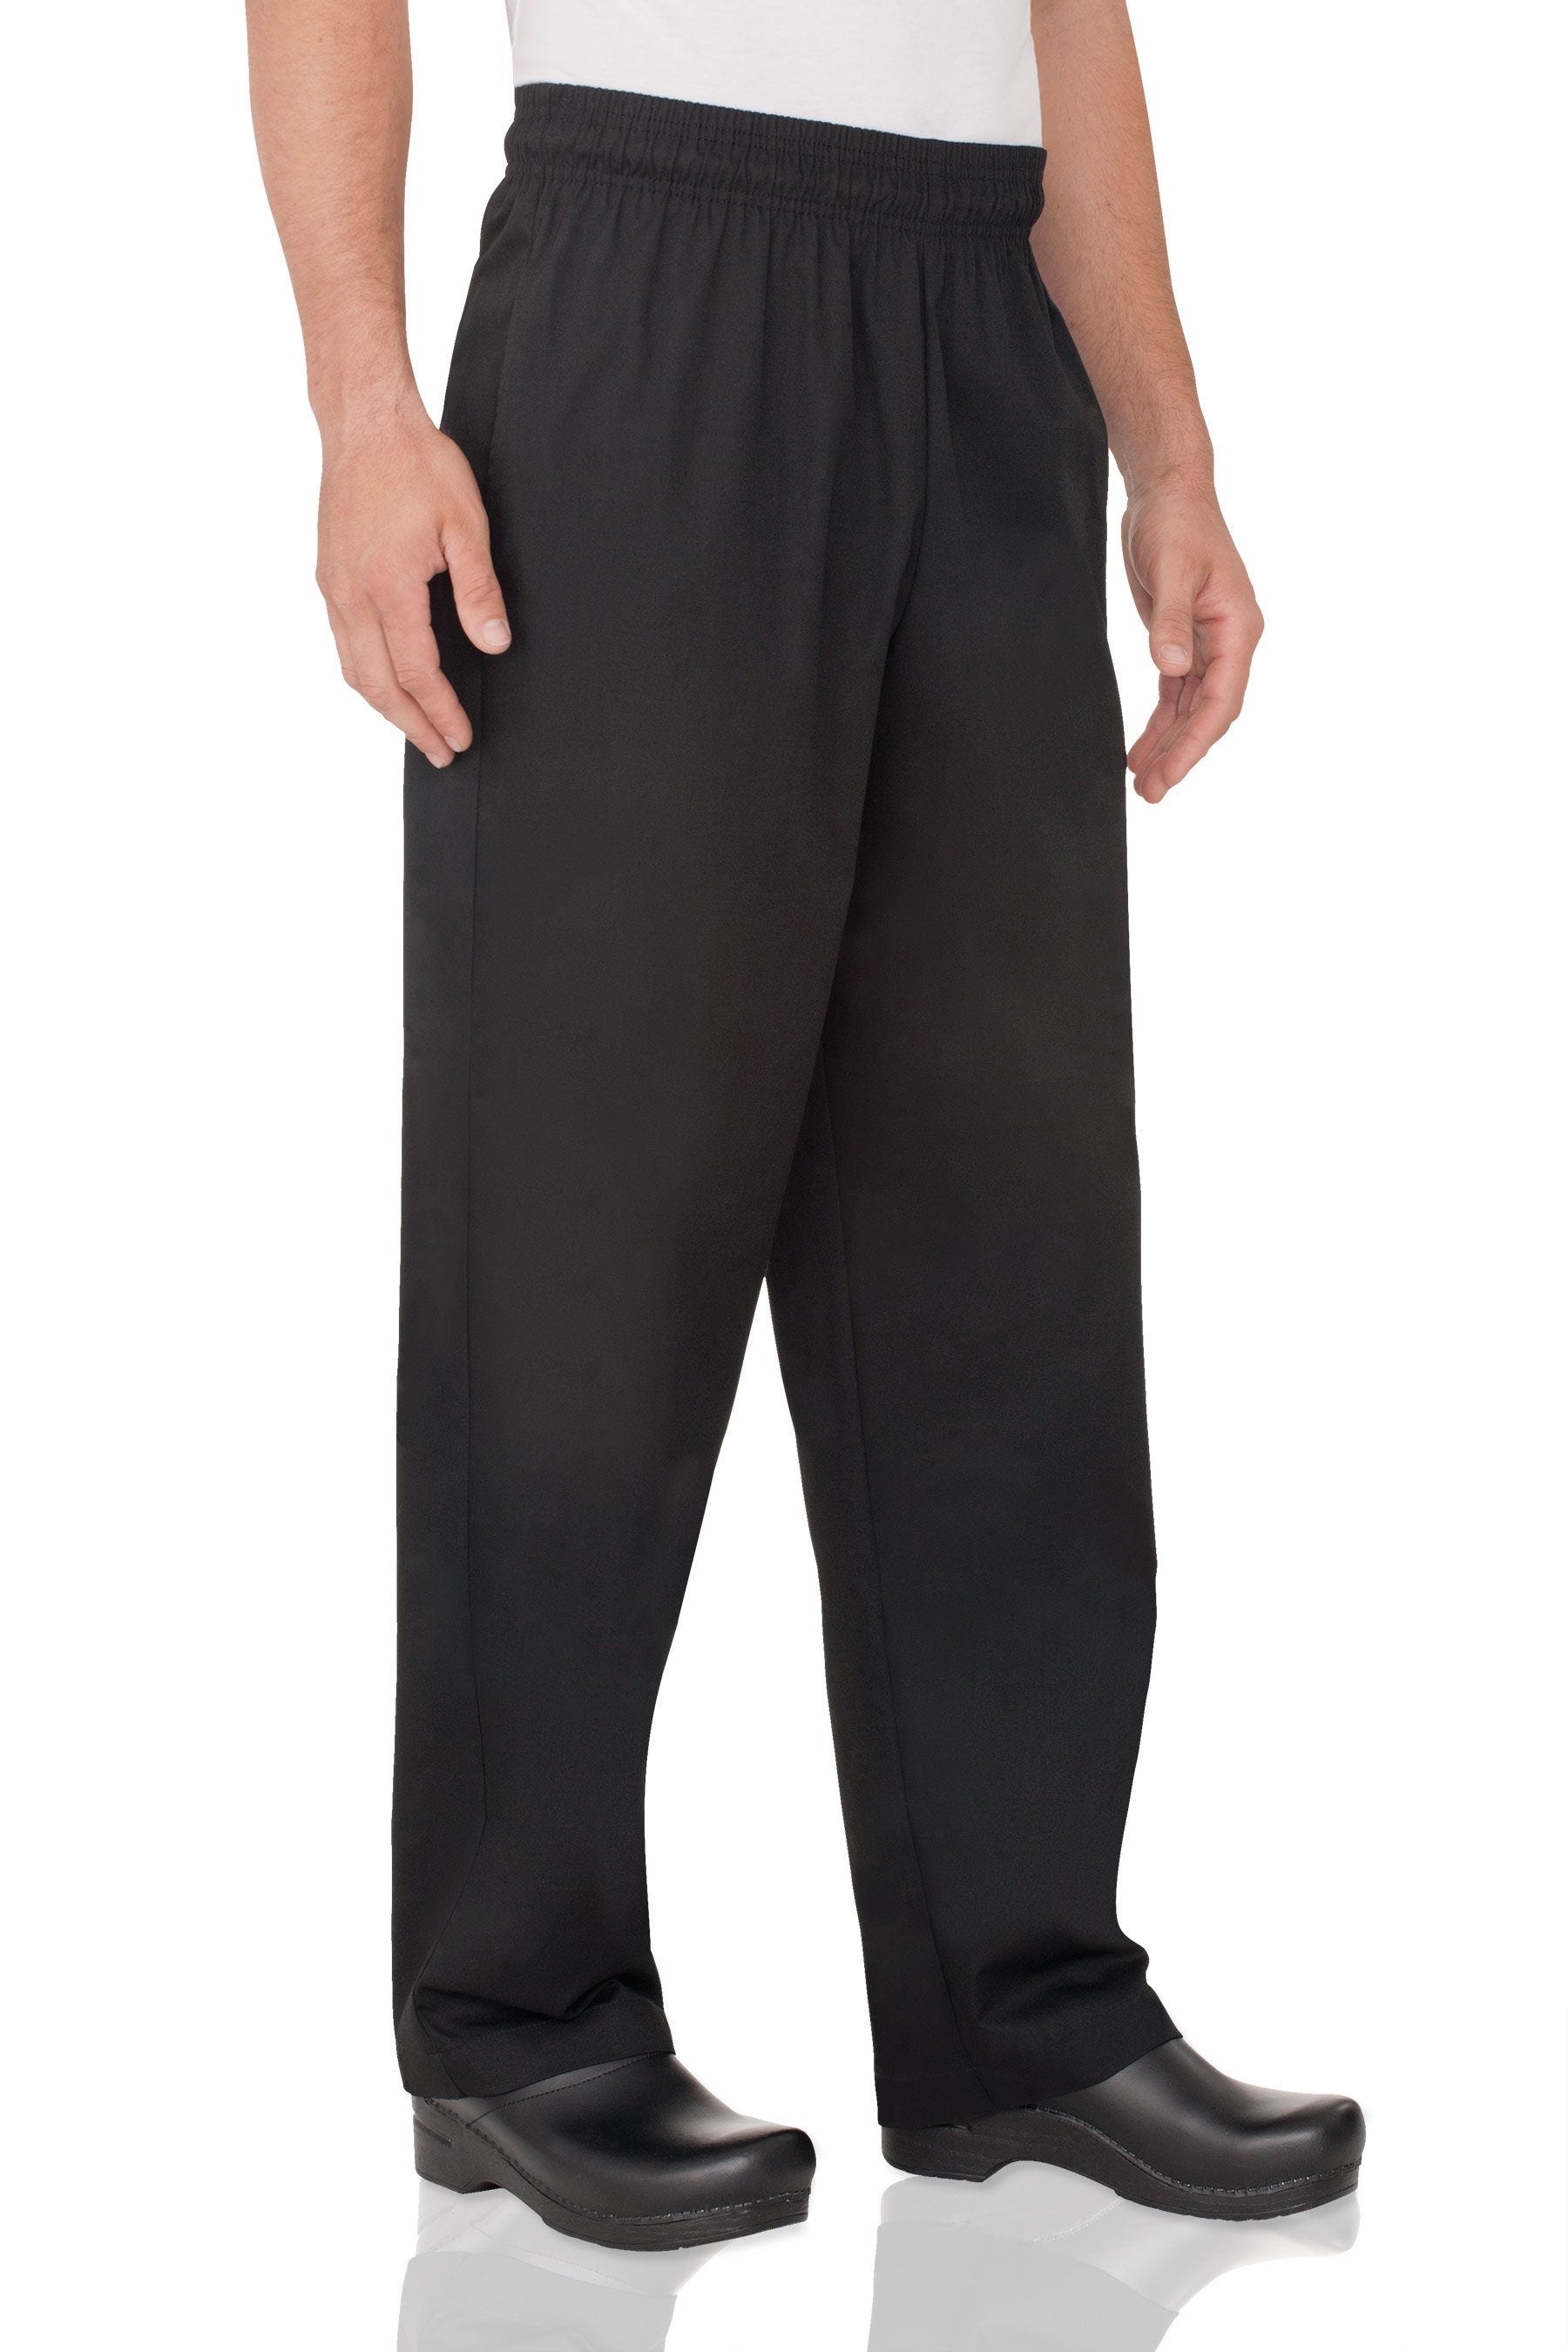 Chef Works Designer Baggy Baggies Trousers GSBP Size 26/28" BNWT Black/Pinstripe 